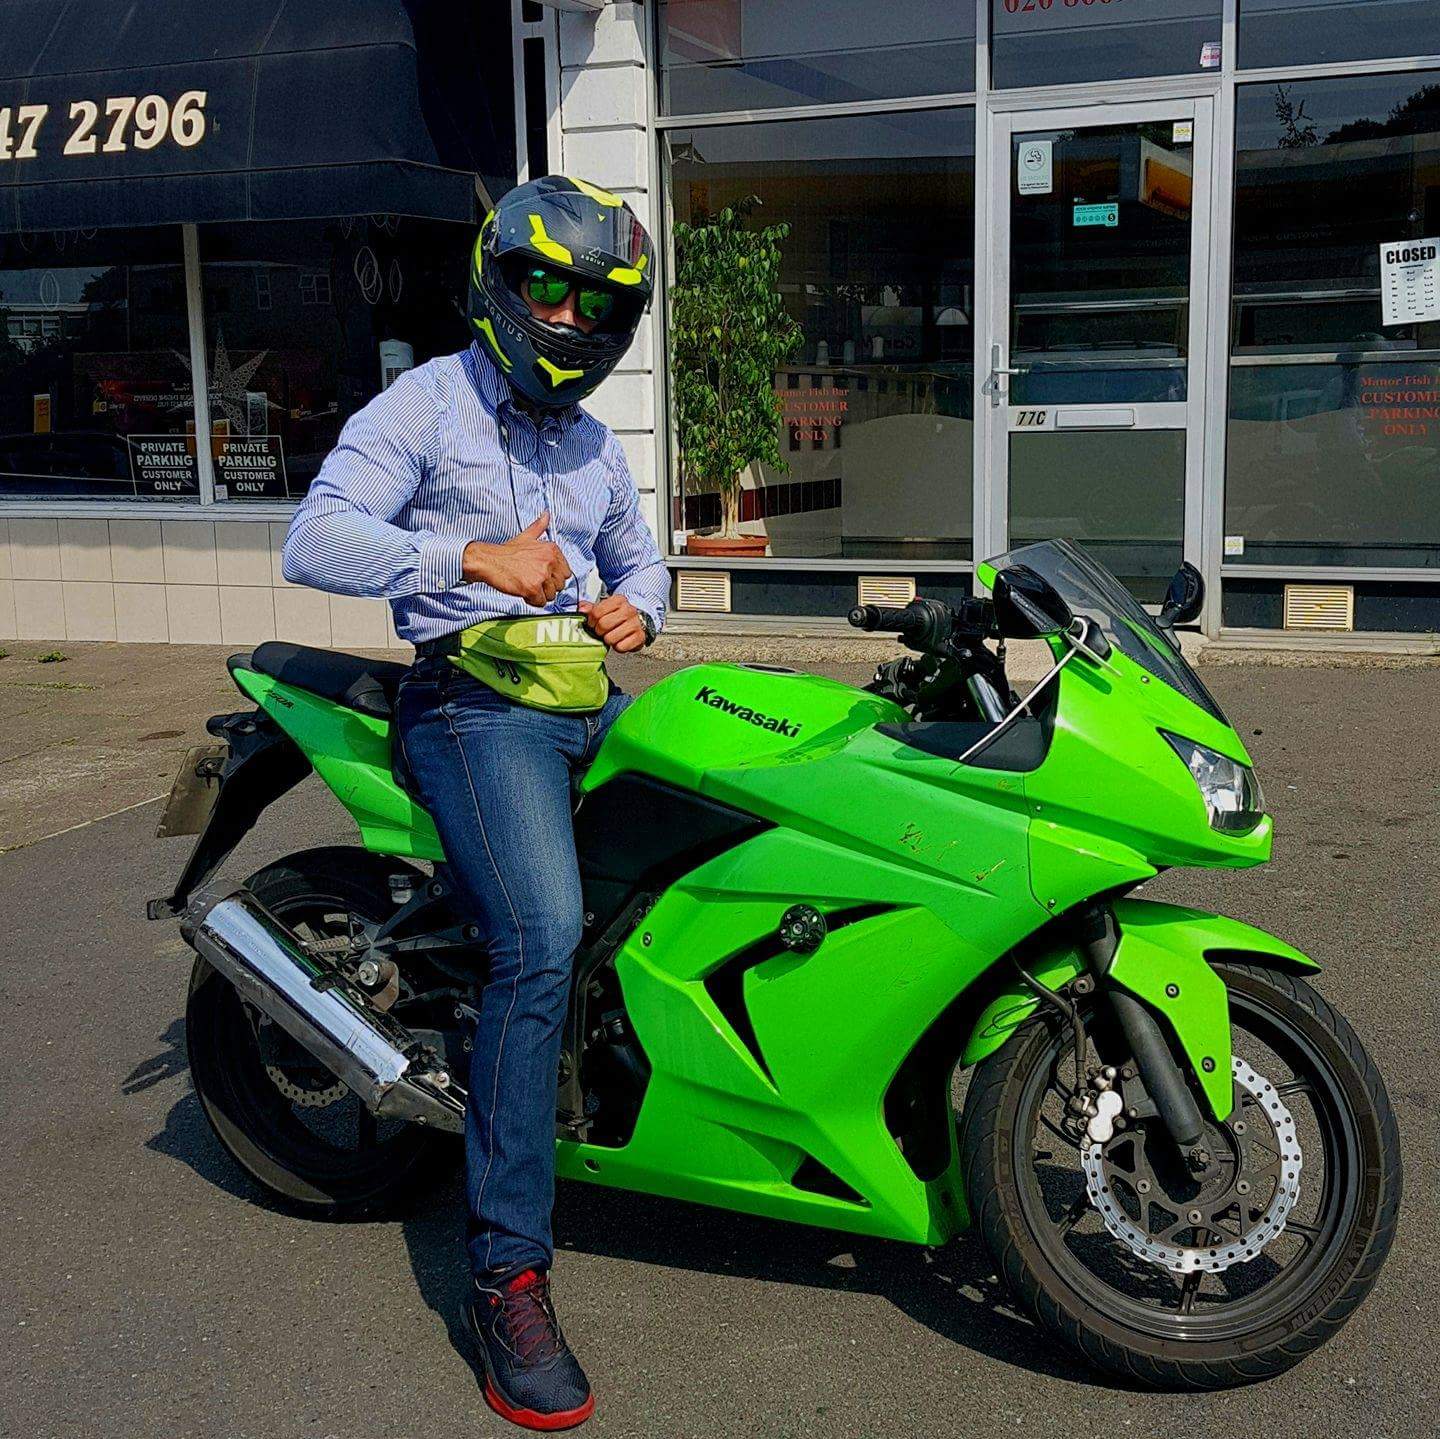 Nick from London – Kawasaki Ninja 250R